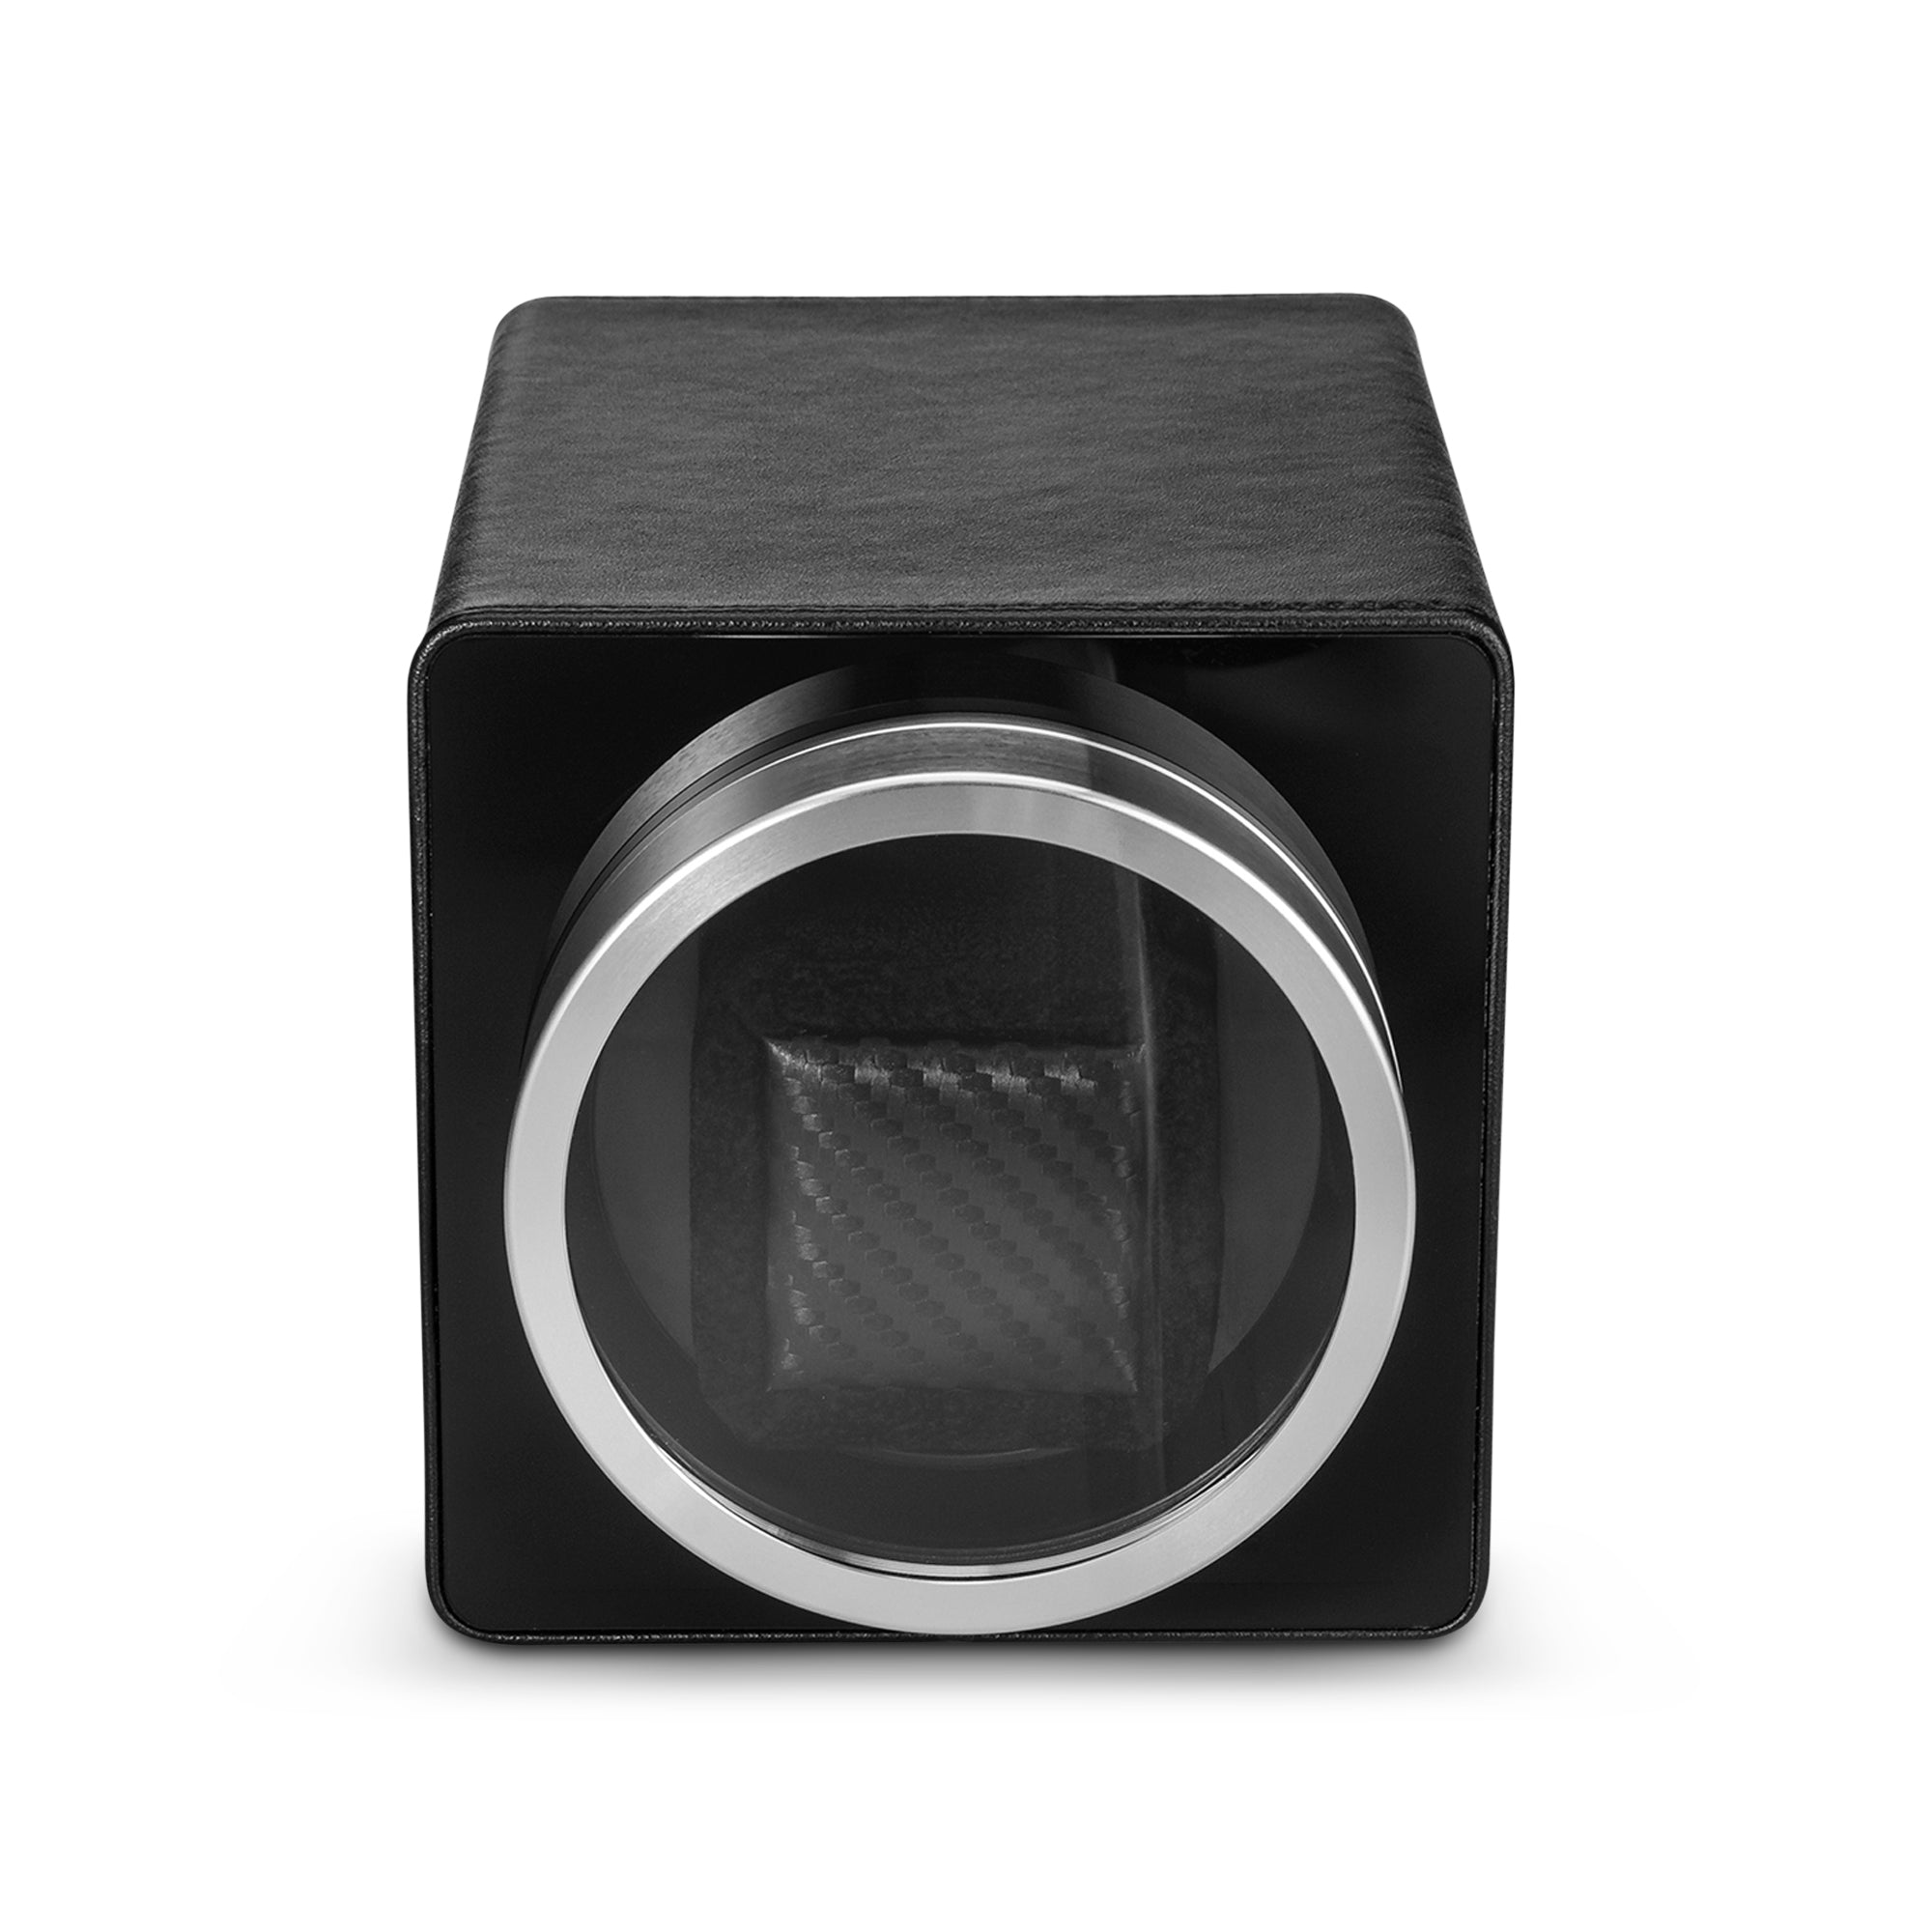 Portero Single Slot Watch Winder - Black